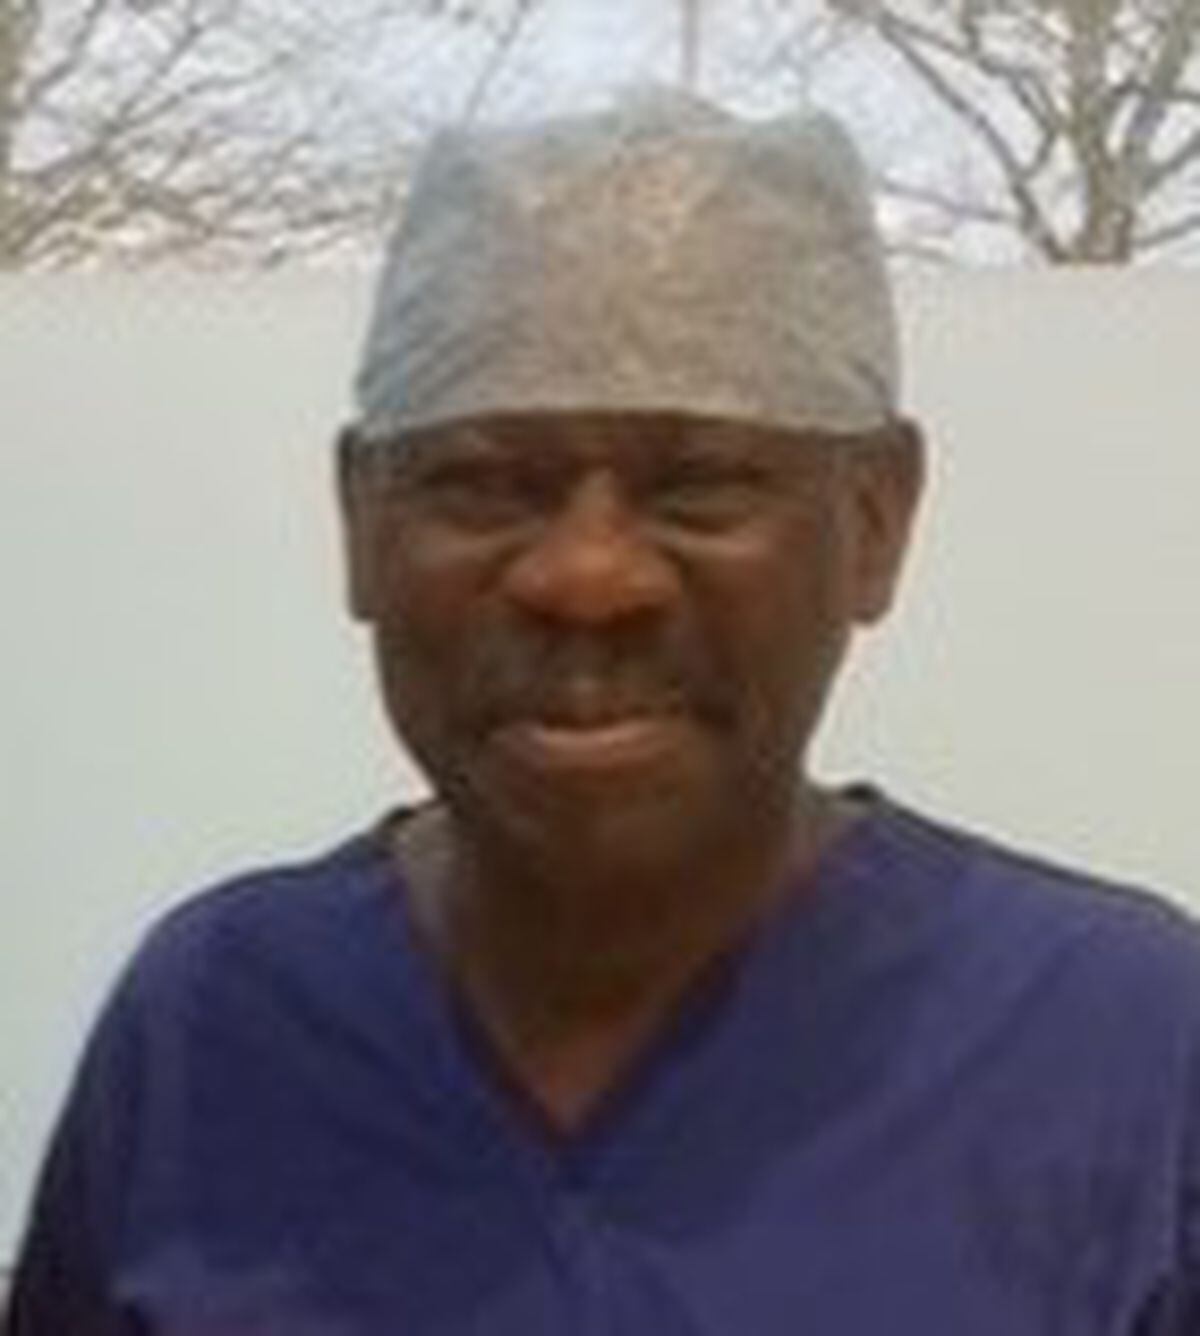  Lifetime Achievement Award - Sam Adjepong, Upper Gastrointestinal Surgeon, based at PRH